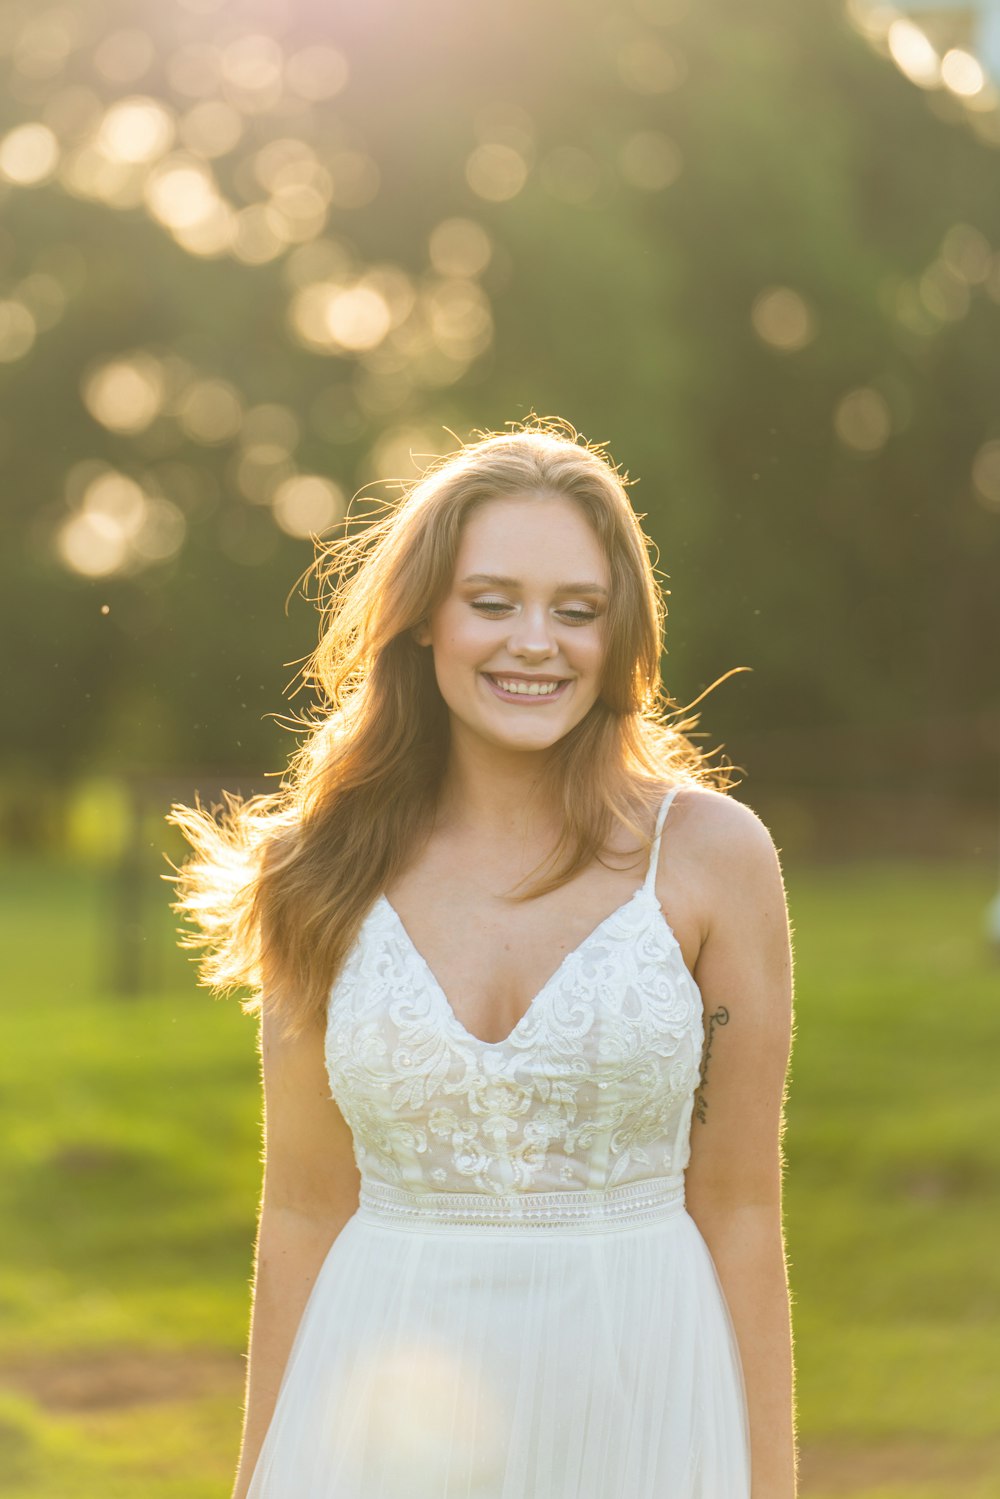 woman in white spaghetti strap top smiling photo – Free Image on Unsplash